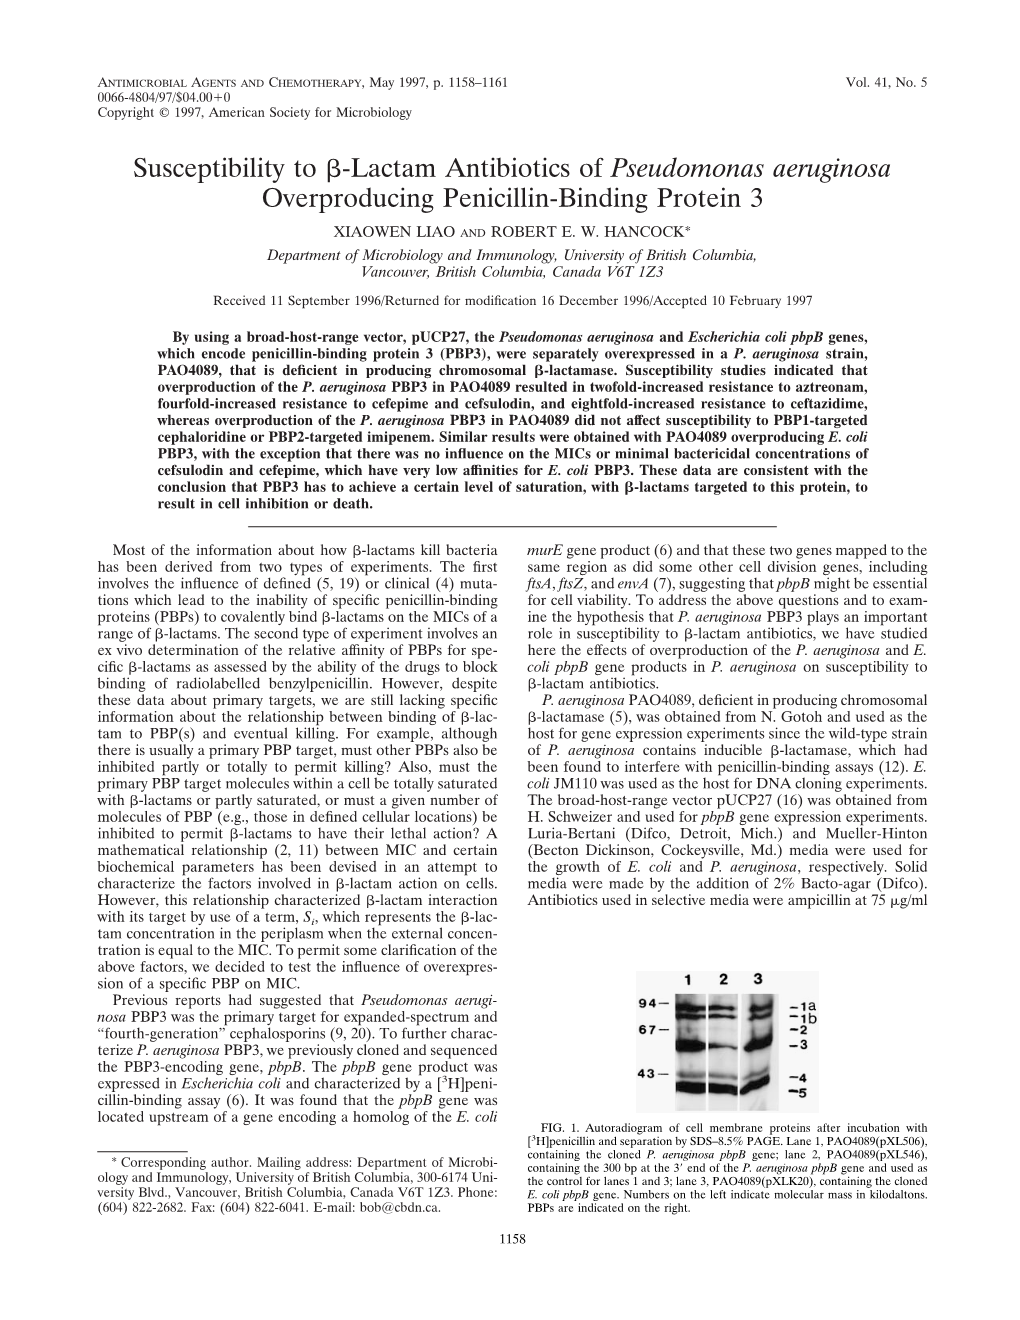 Lactam Antibiotics of Pseudomonas Aeruginosa Overproducing Penicillin-Binding Protein 3